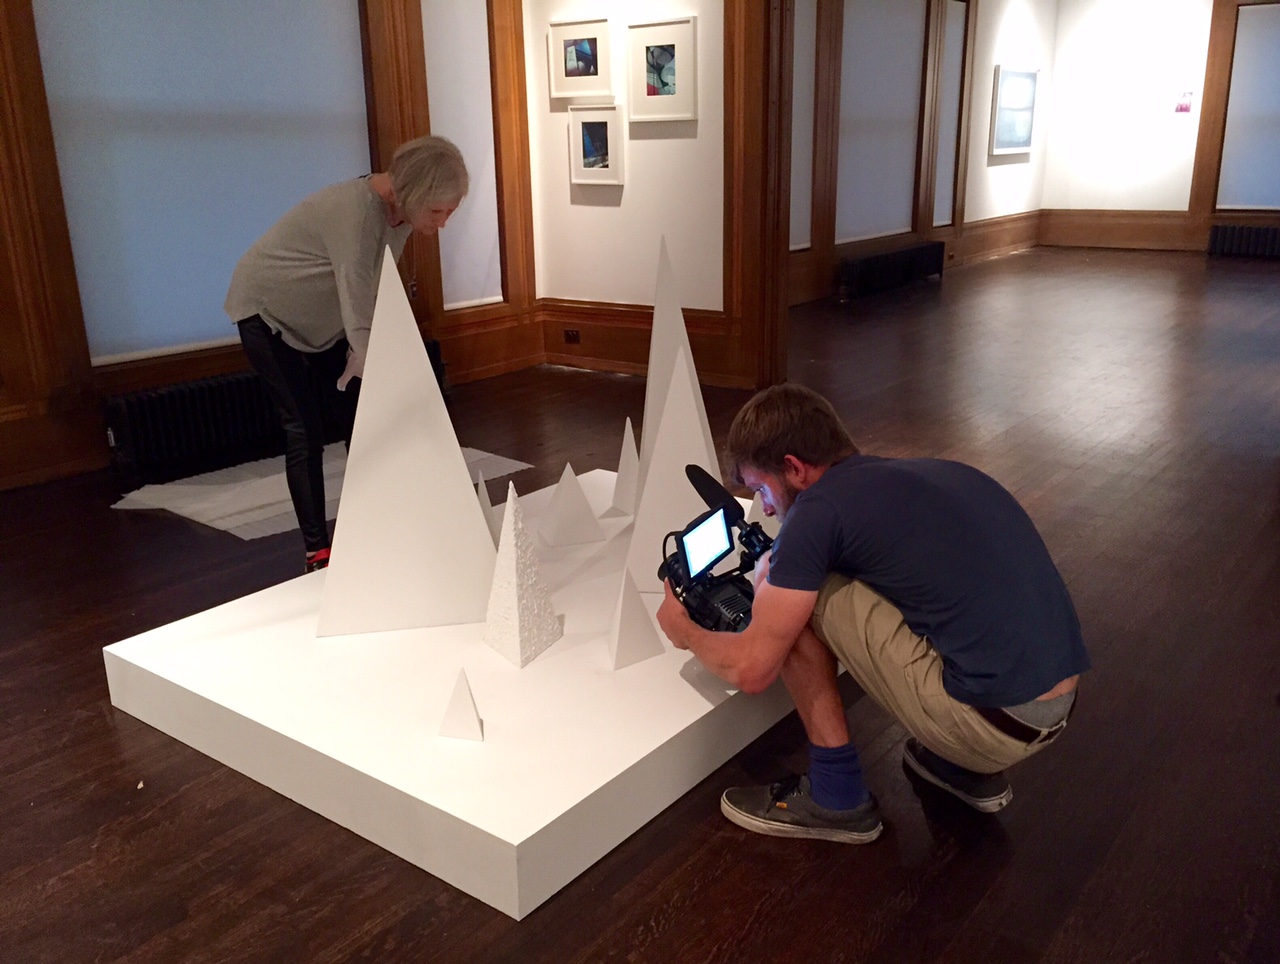 ART21 filming Barbara Kasten at The Graham Foundation in Chicago, USA, 2015. Behind the scenes of ART21’s series Art in the Twenty-First Century, Season 8, 2016. Photo: Nick Ravich. © ART21, Inc. 2016.